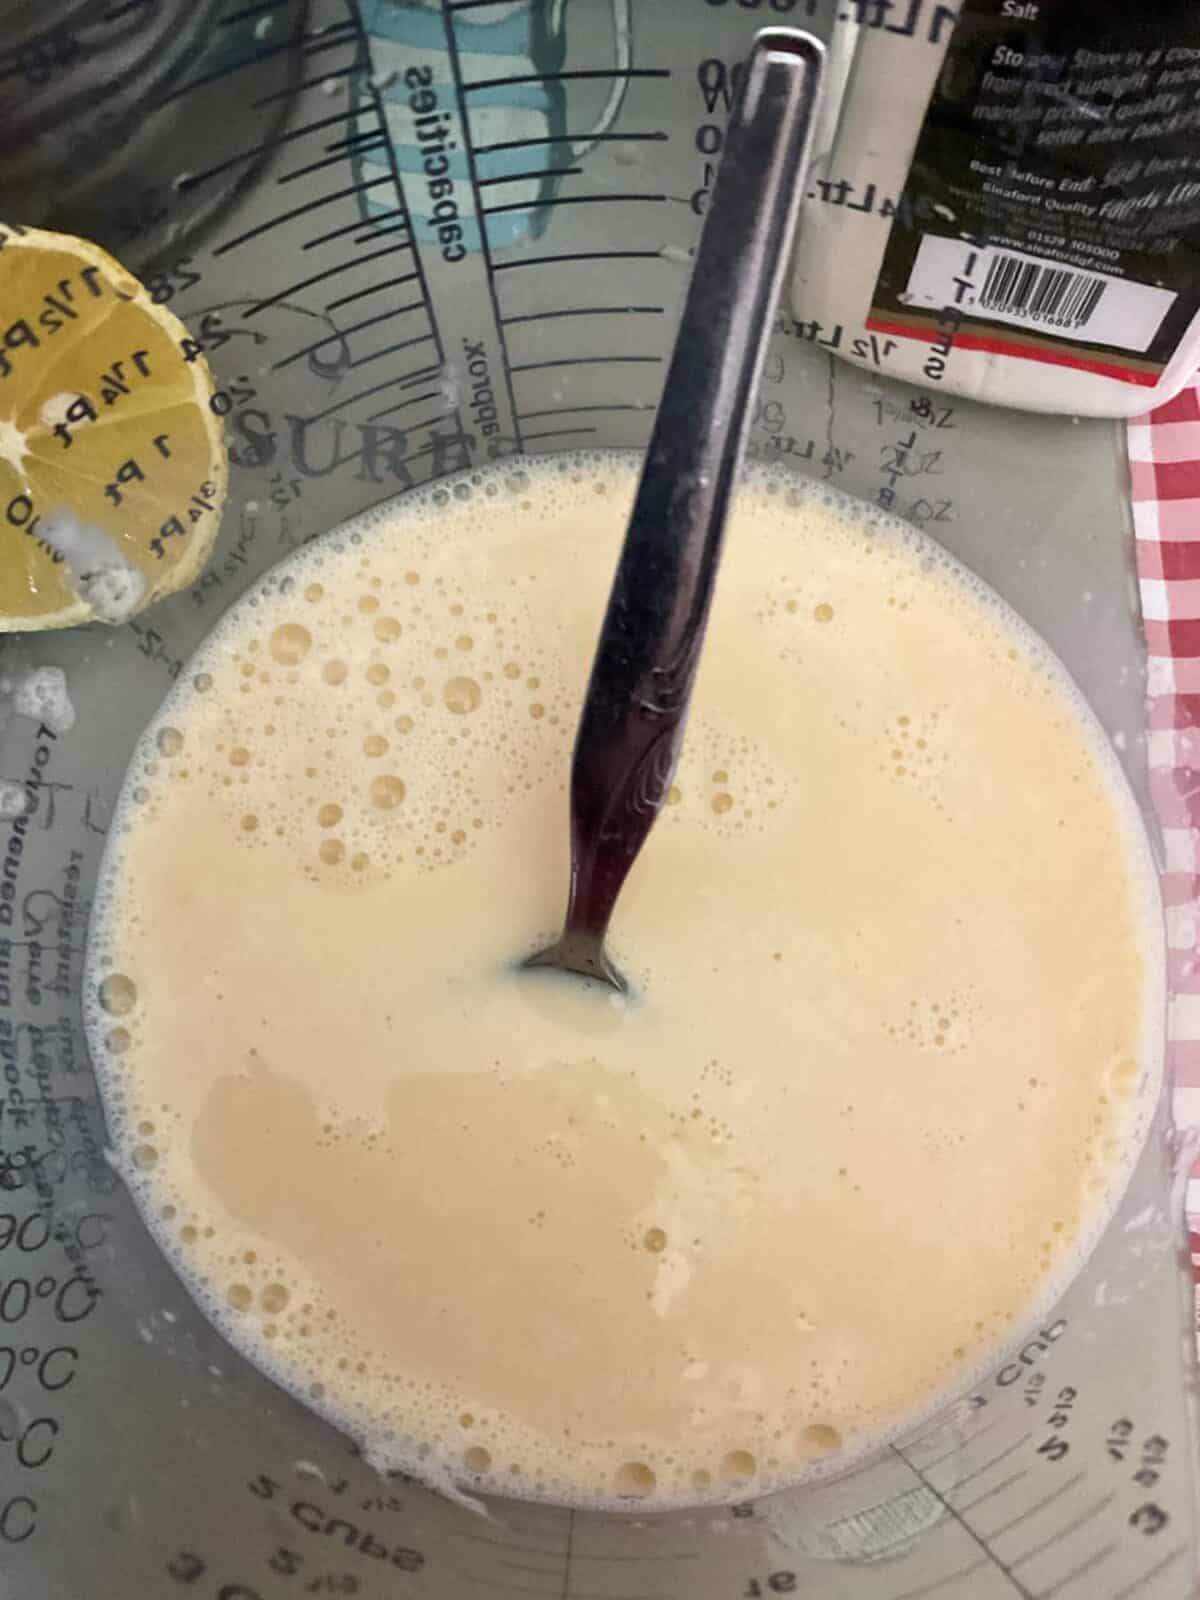 Vegan buttermilk in glass jar with silver spoon.